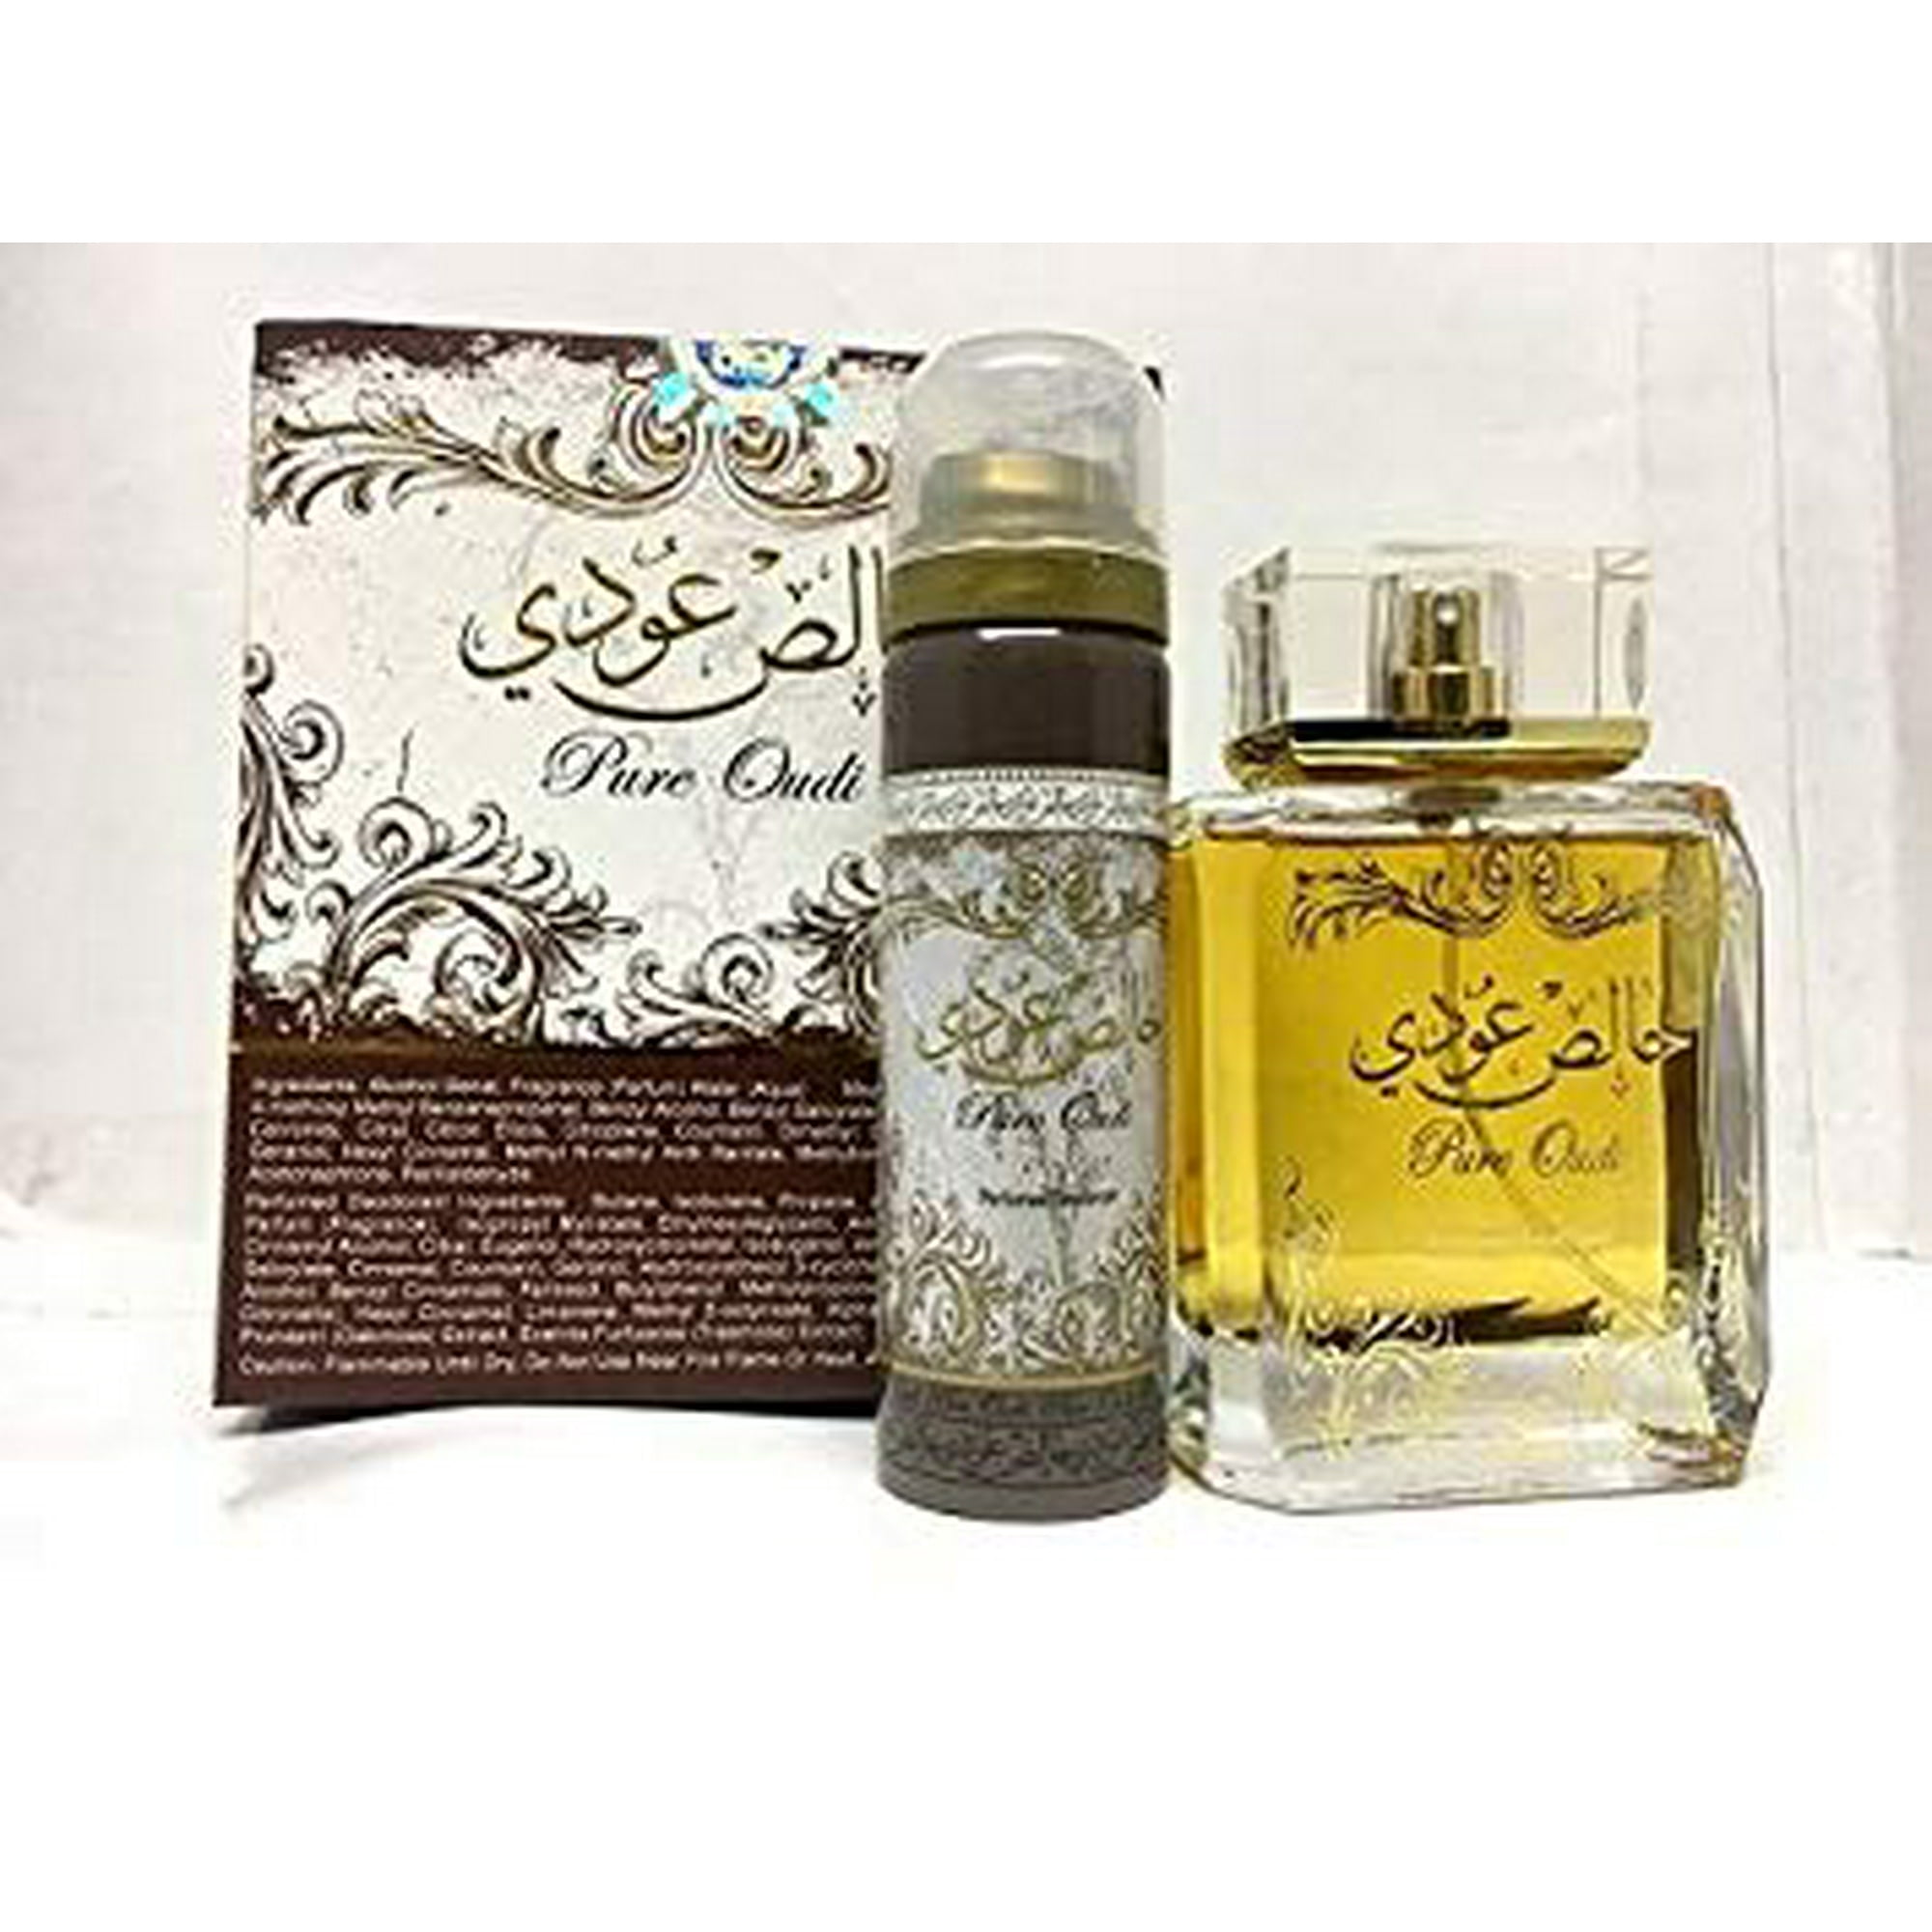 Pure Oudi - Eau De Parfum Spray (100 ml (with Deo) - 3.4Fl oz) by